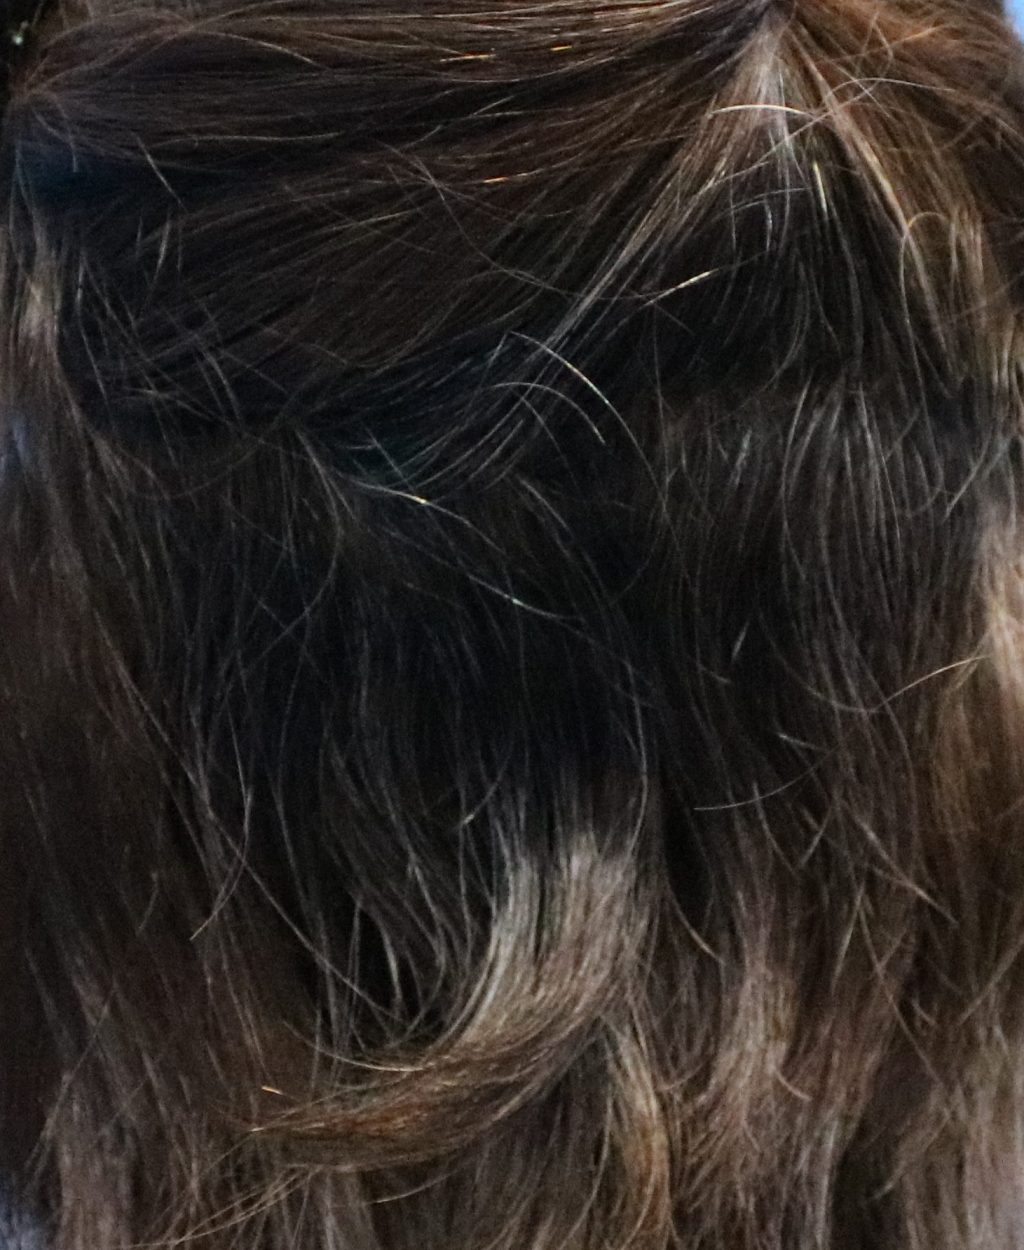 Female Hair Loss Back Angle Result